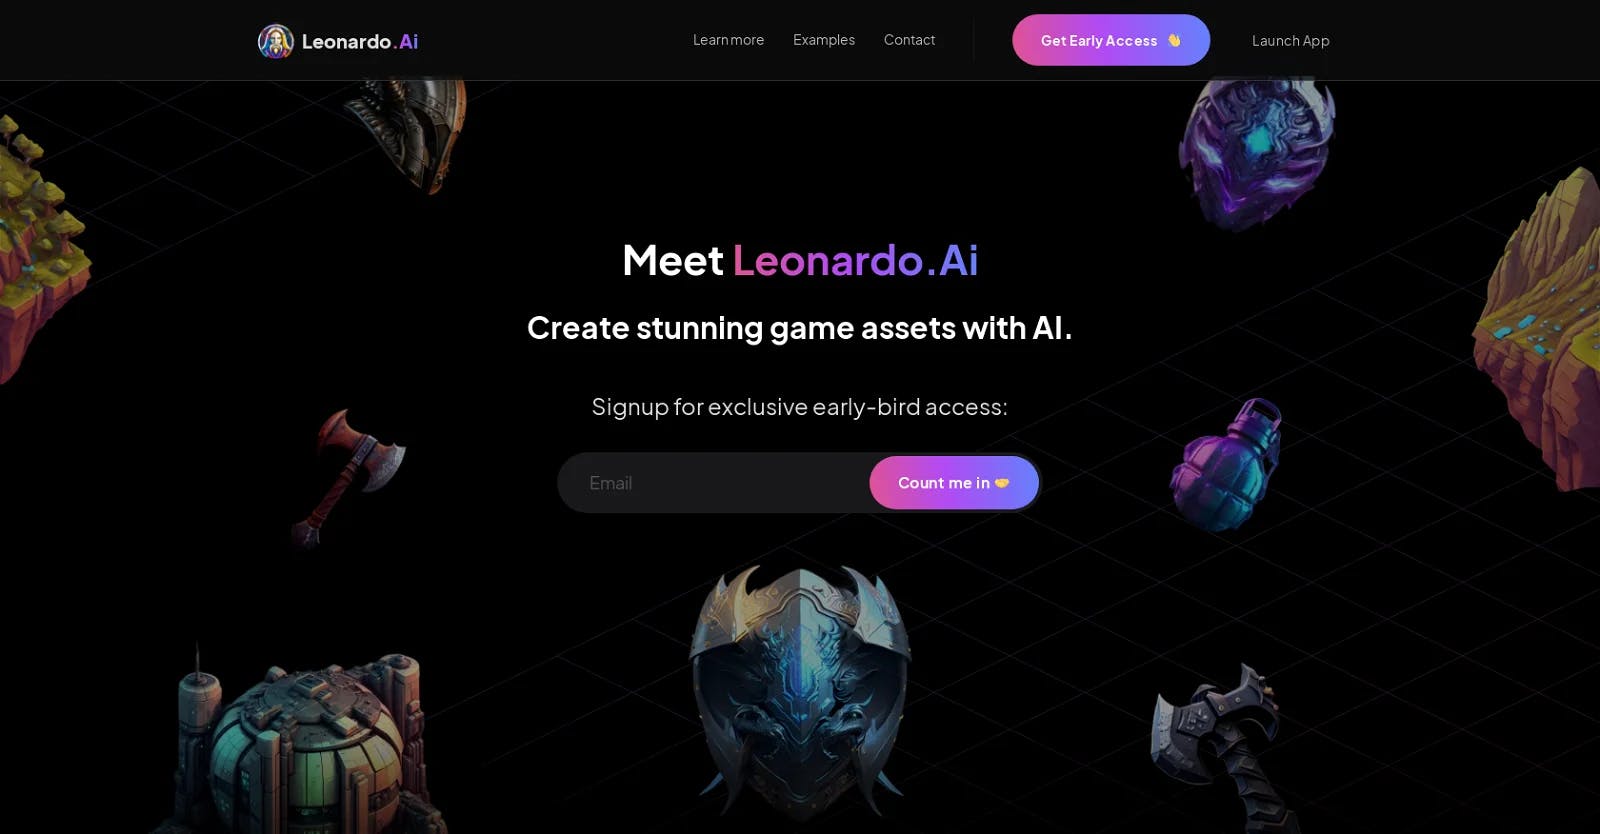 Leonardo AI プロンプトの世界に深く入り込んでみましょう。完璧なプロンプトの作成の秘訣を探求し、専門的なアプリケーションを探索し、サンプルのプロンプトと出力を体験してみましょう。Leonardo AI をマスターするための究極のガイドがここにあります！